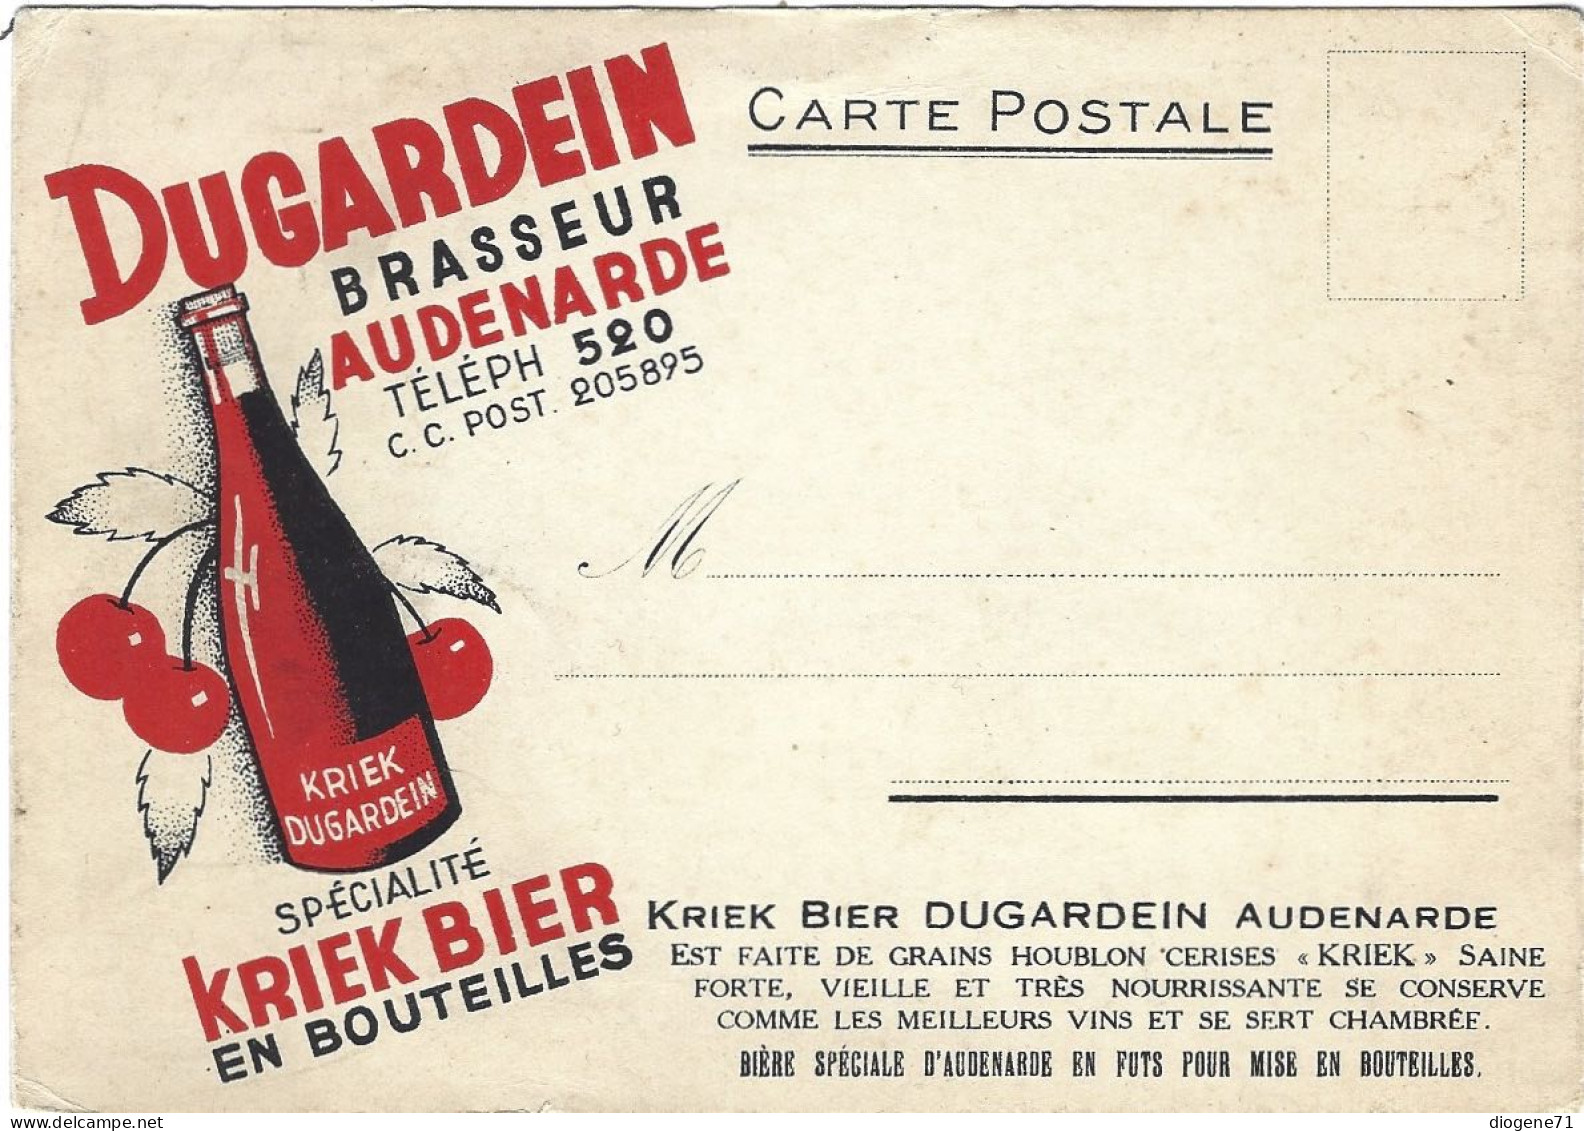 Dugardein Brasseur Audenarde Kriek Bier GF - Advertising